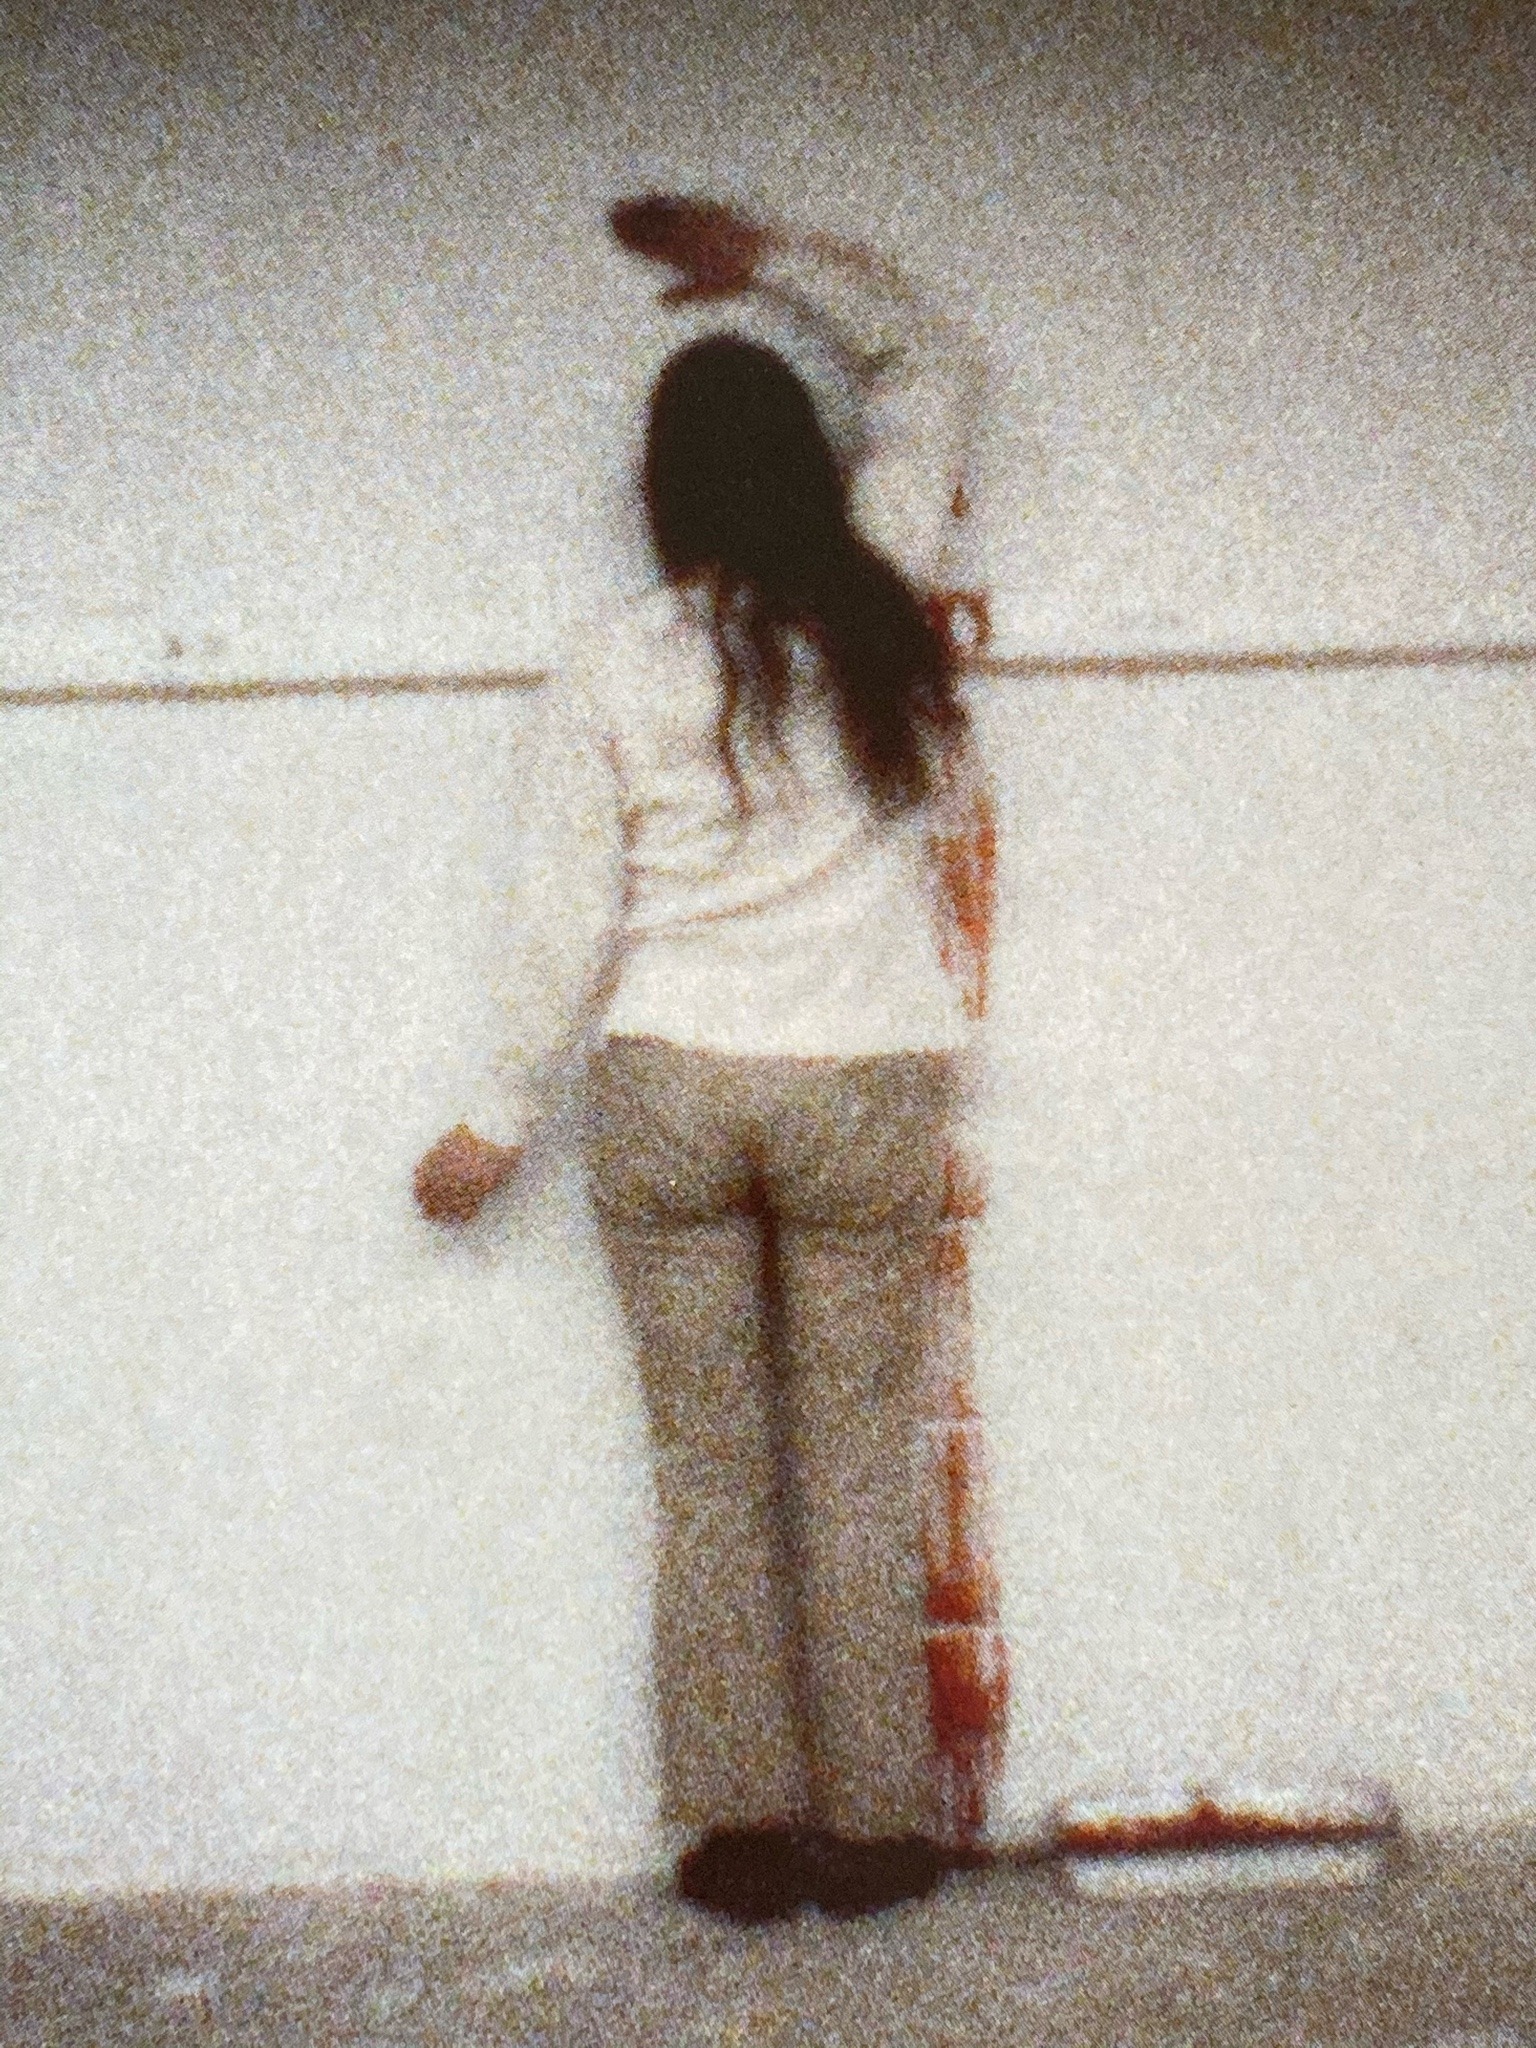 metalegg:Ana Mendieta, Blood Sign, 1974